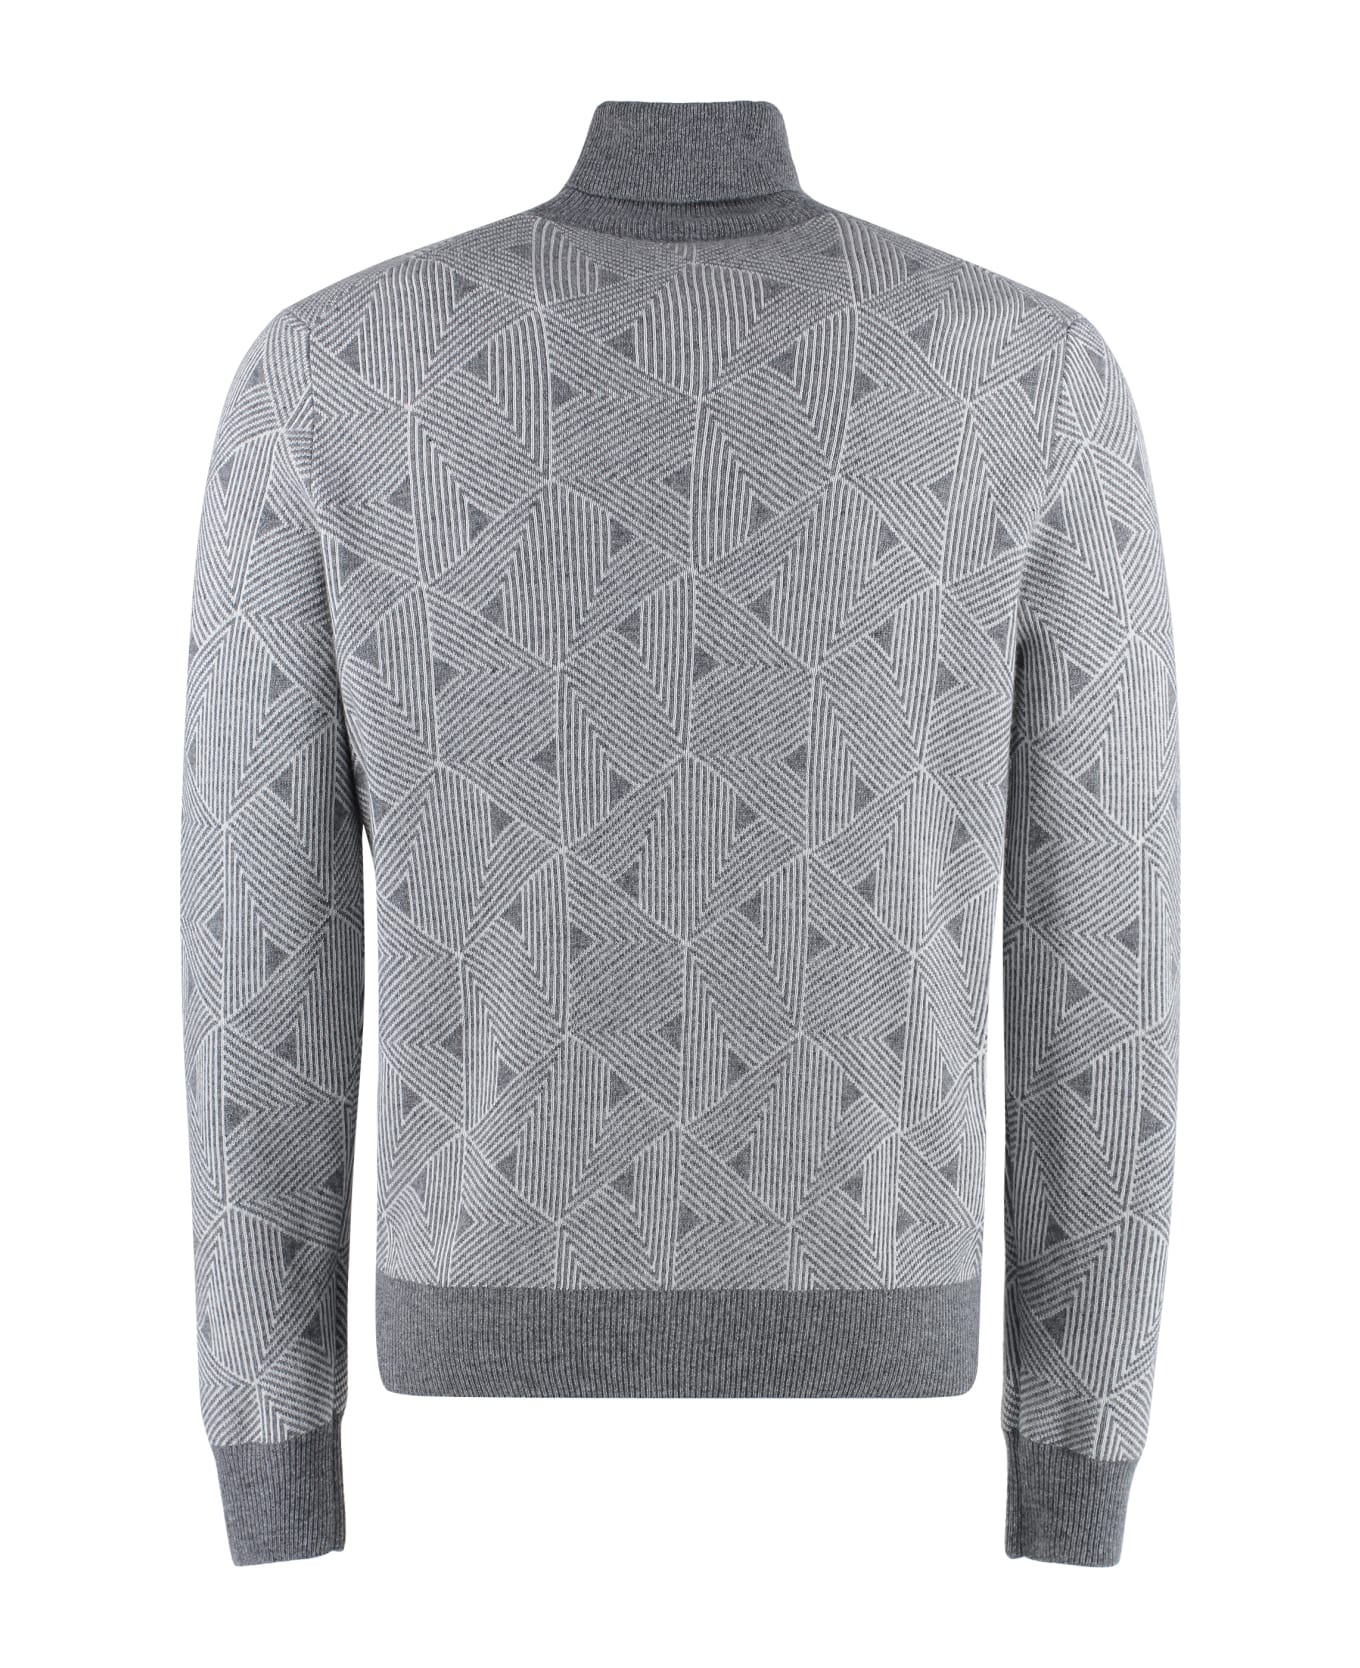 Canali Cashmere Blend Turtleneck Sweater - grey